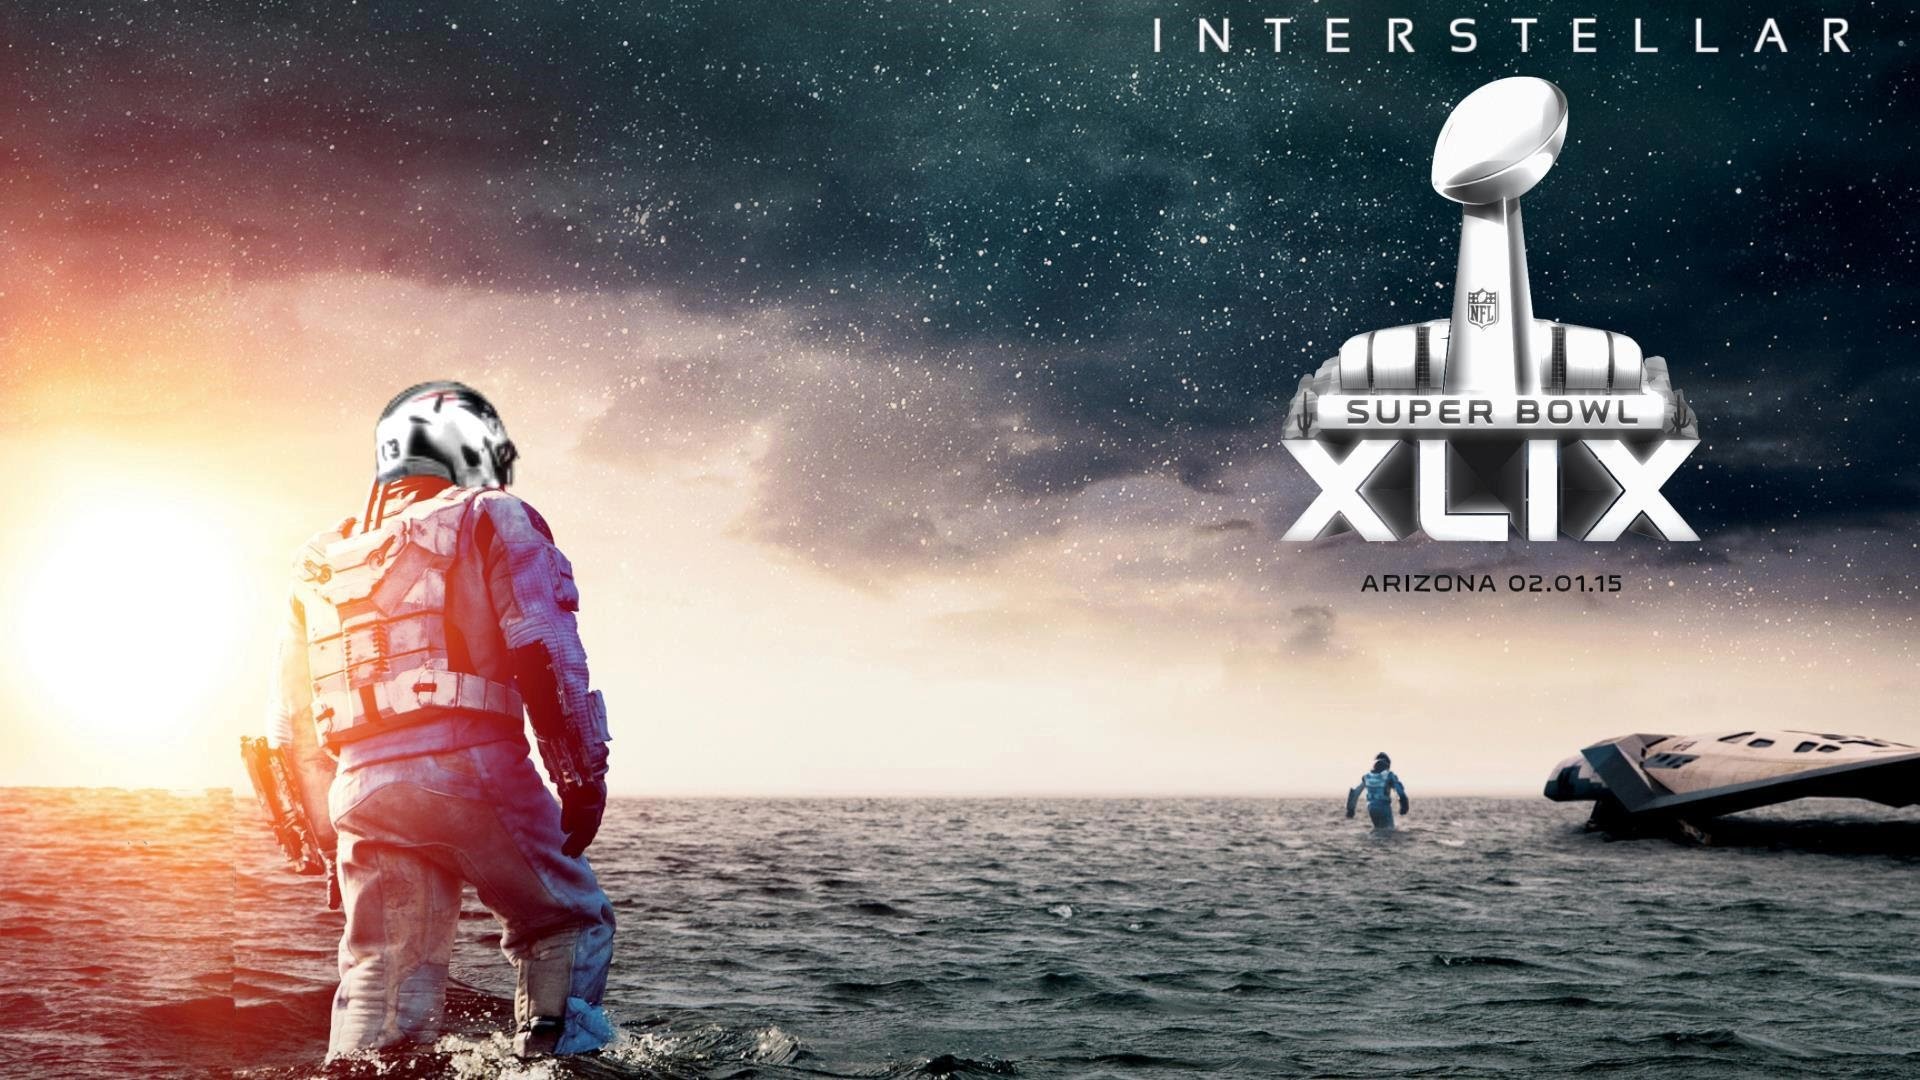 1920x1080 New England Patriots 2015 NFL Playoffs: (Interstellar Mix) Destination:  Super Bowl XLIX [HD] - YouTube